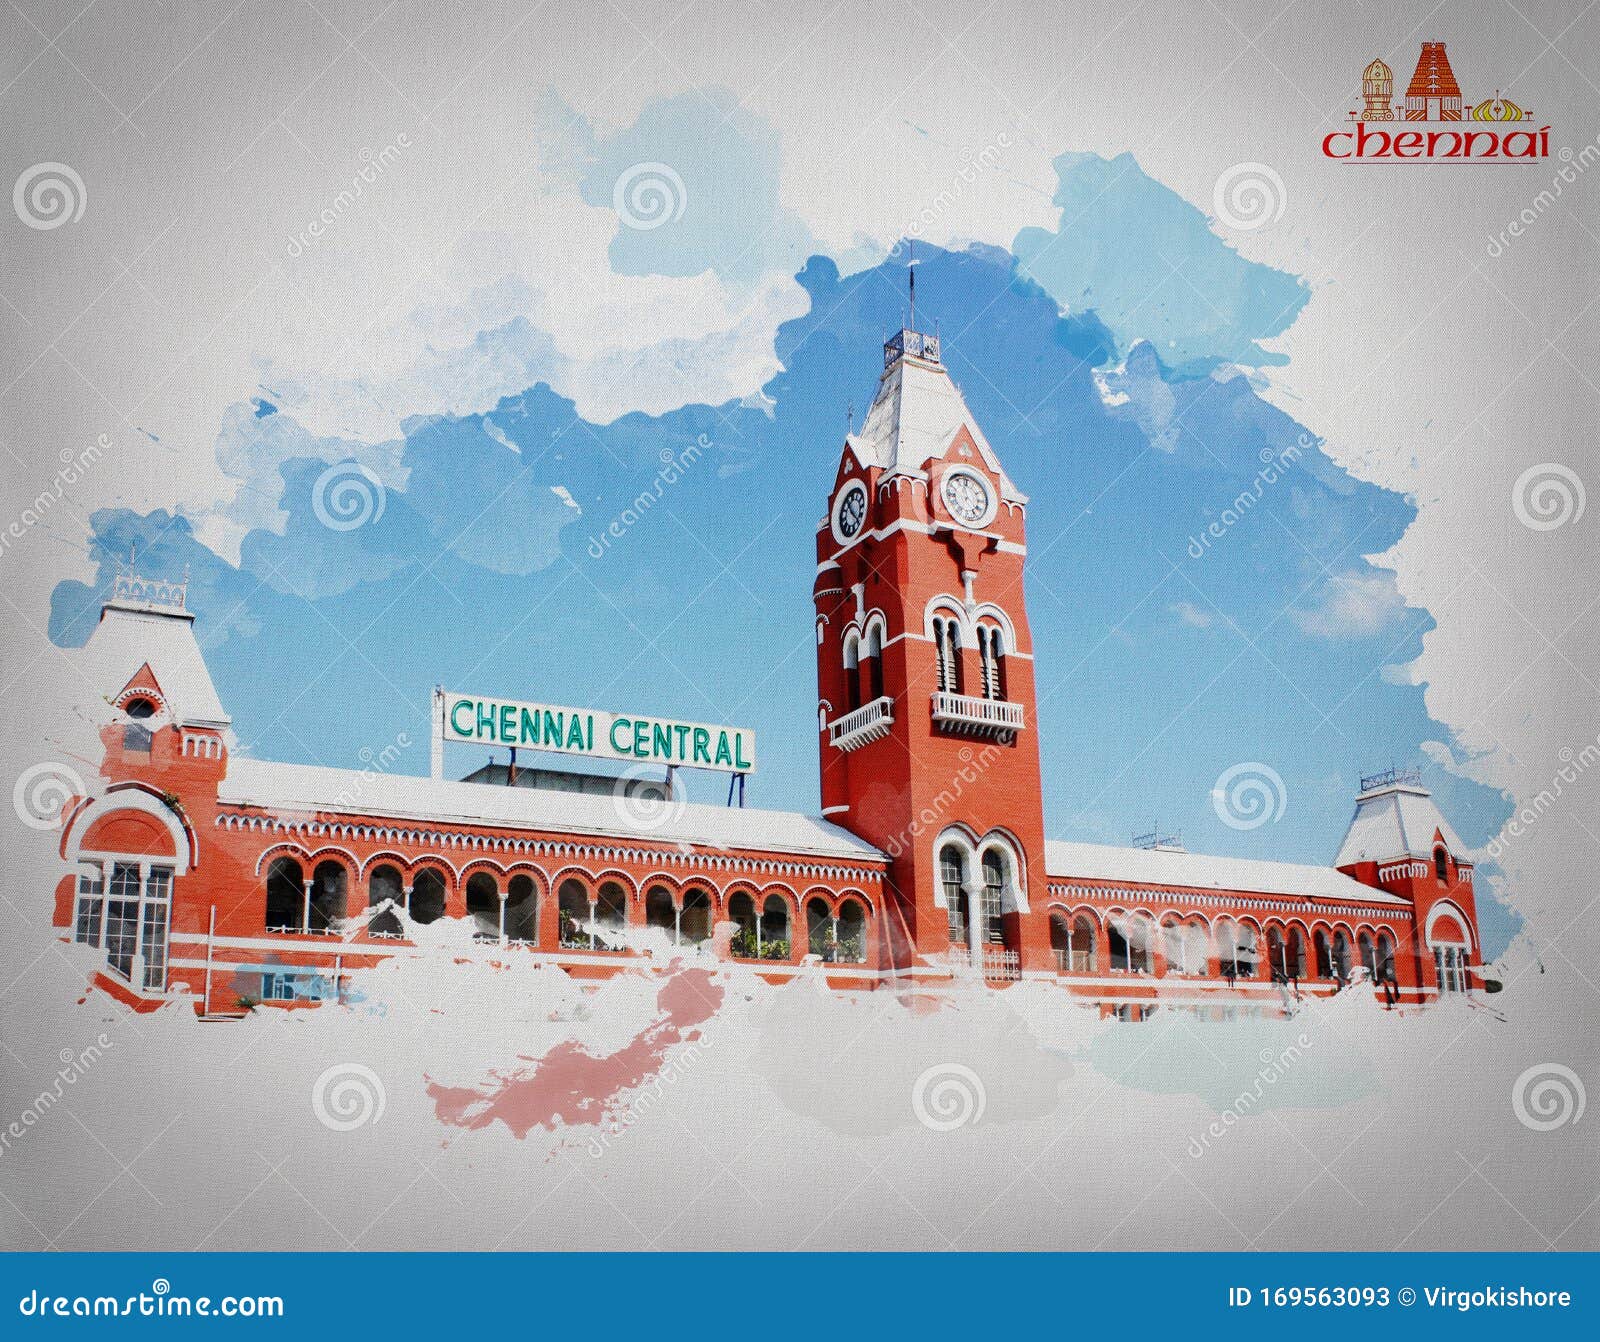 chennai central railway station chennai tourist place